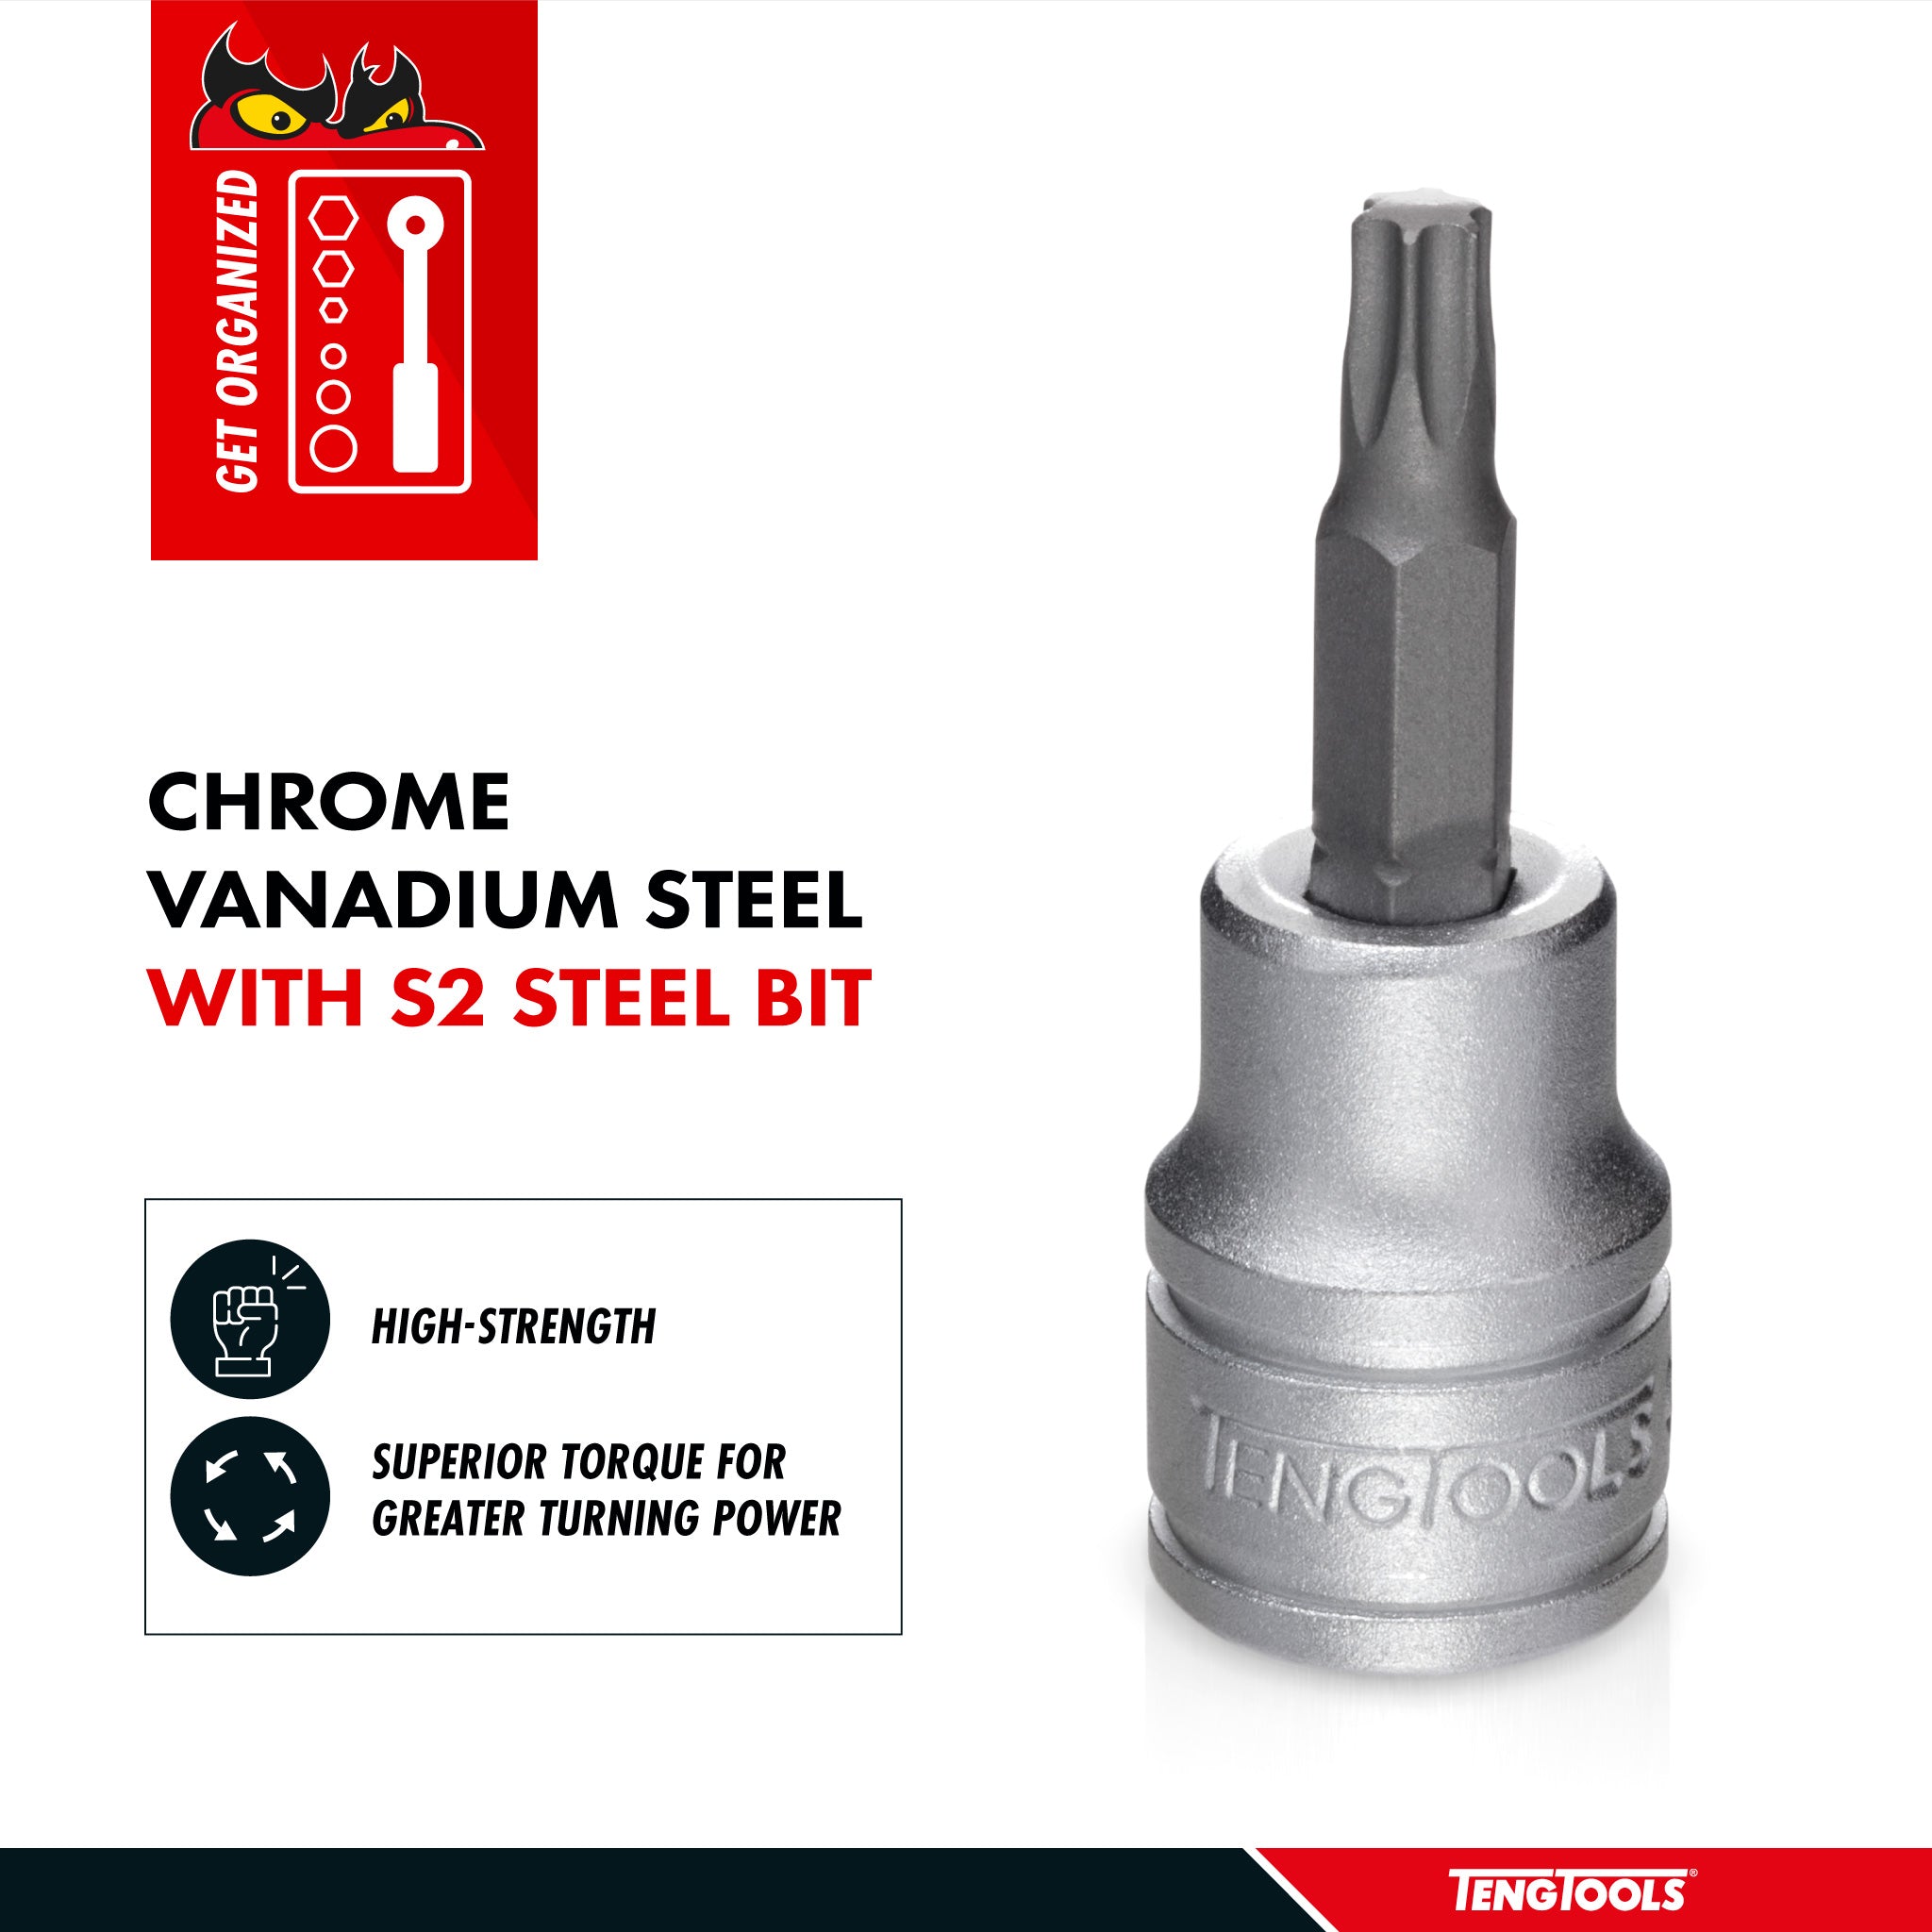 Teng Tools 3/8 Inch Drive Metric Torx TX Chrome Vanadium Sockets